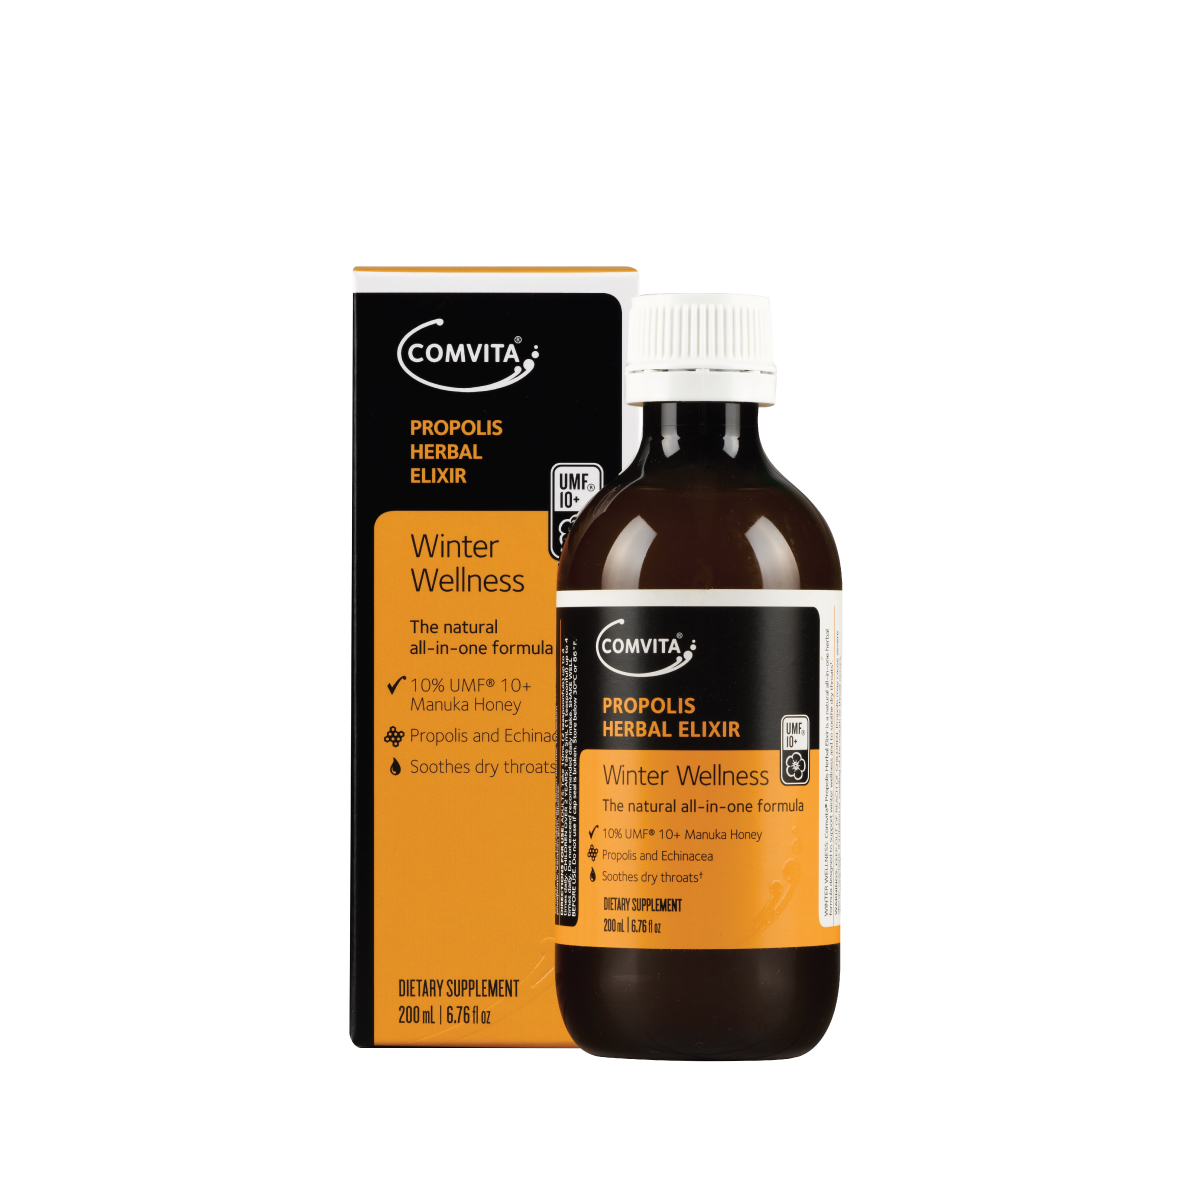 Comvita Propolis Elixir added with Comvita Manuka Honey UMF 10+